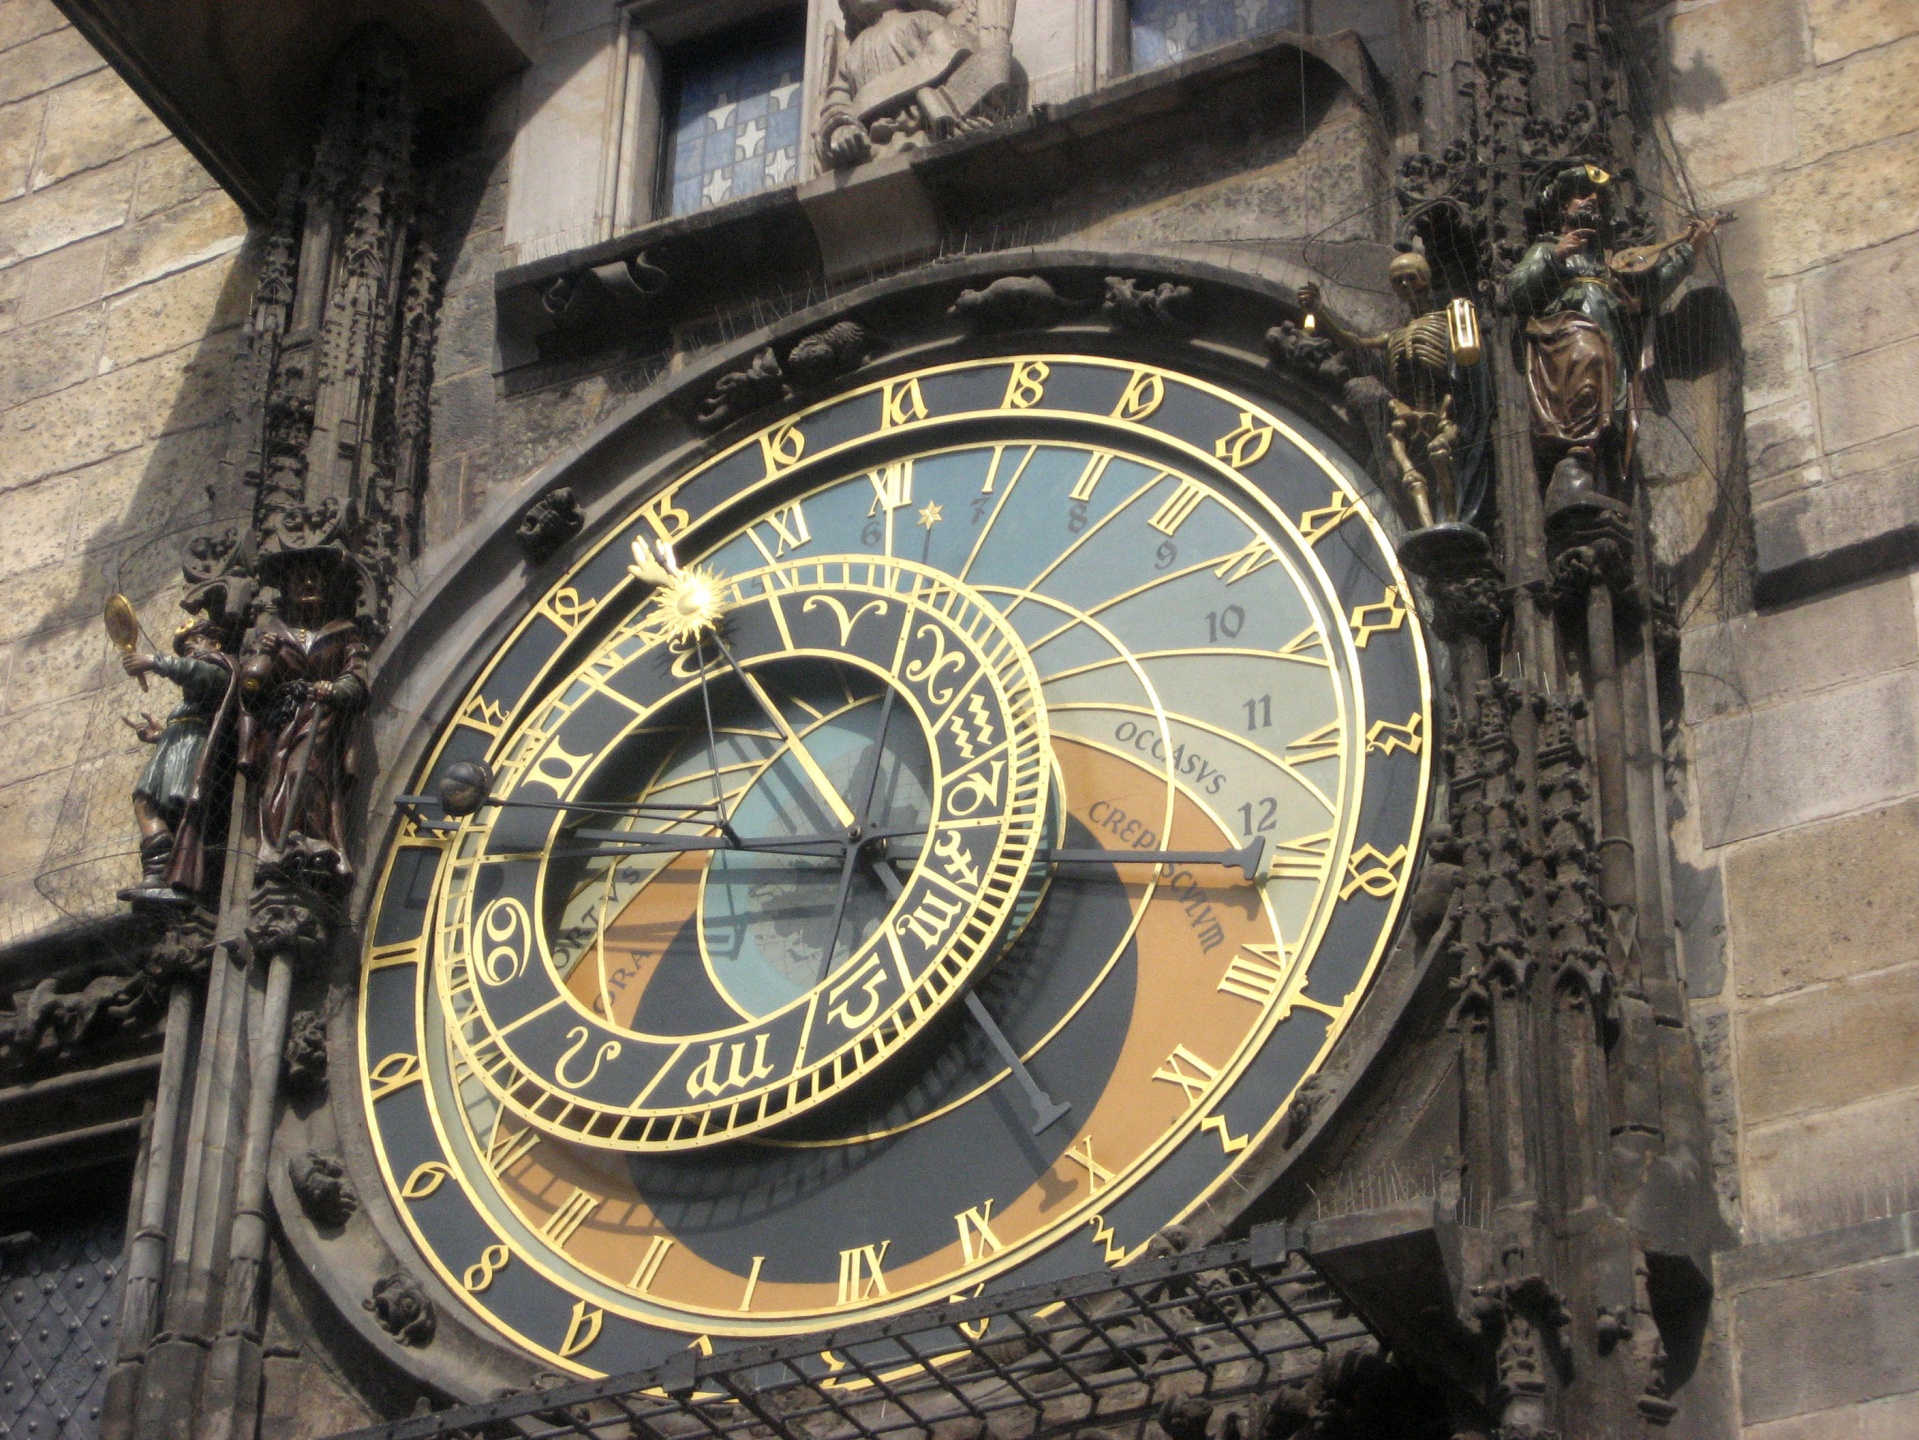 The Astronomer's Clock